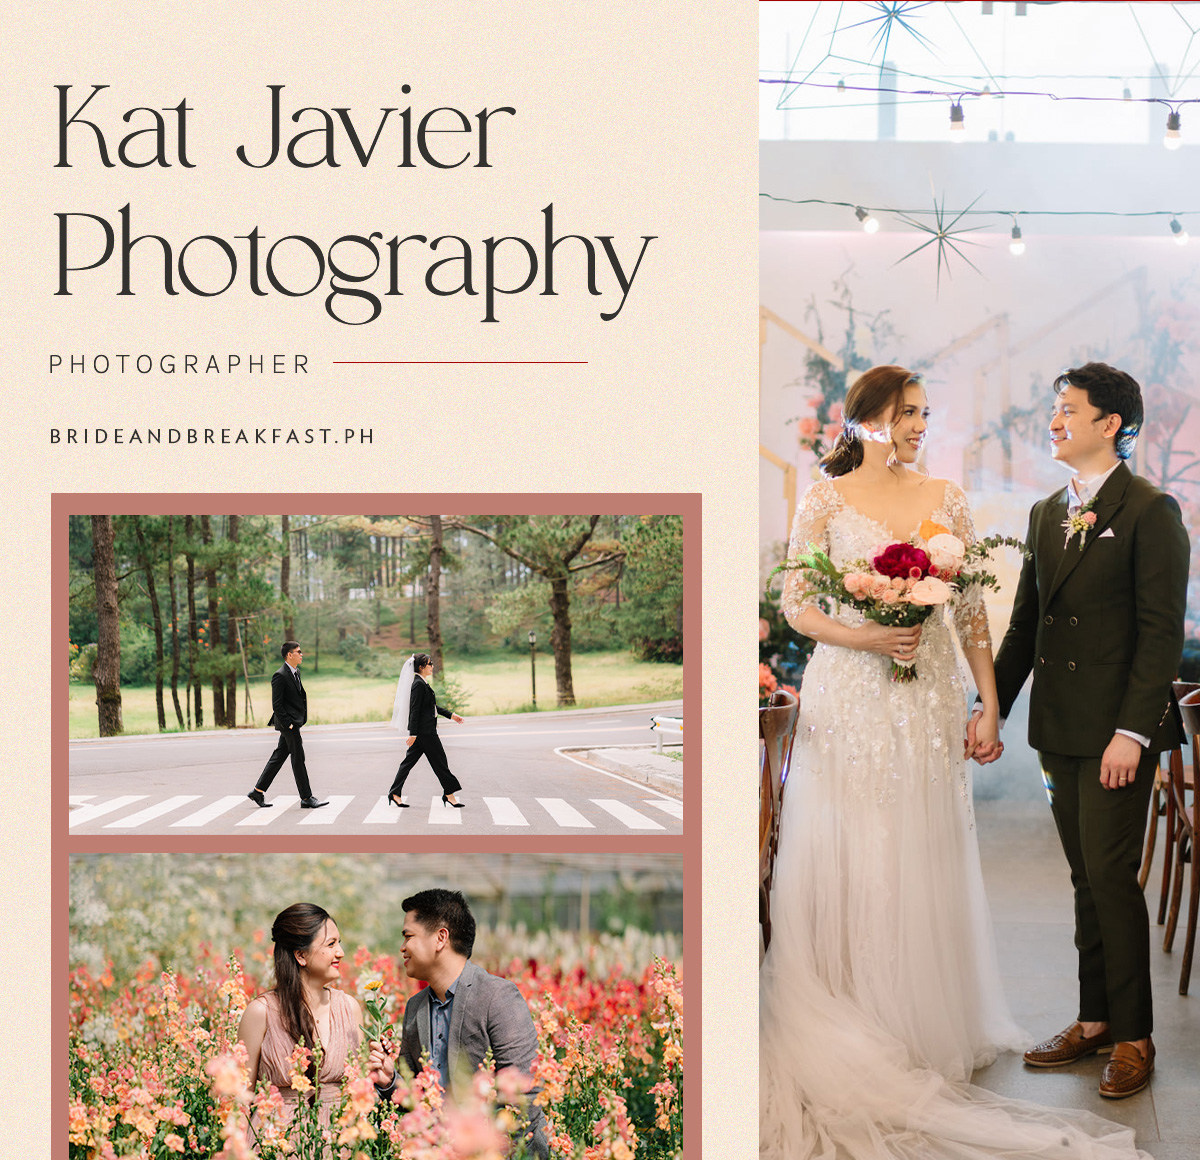 Kat Javier Photography